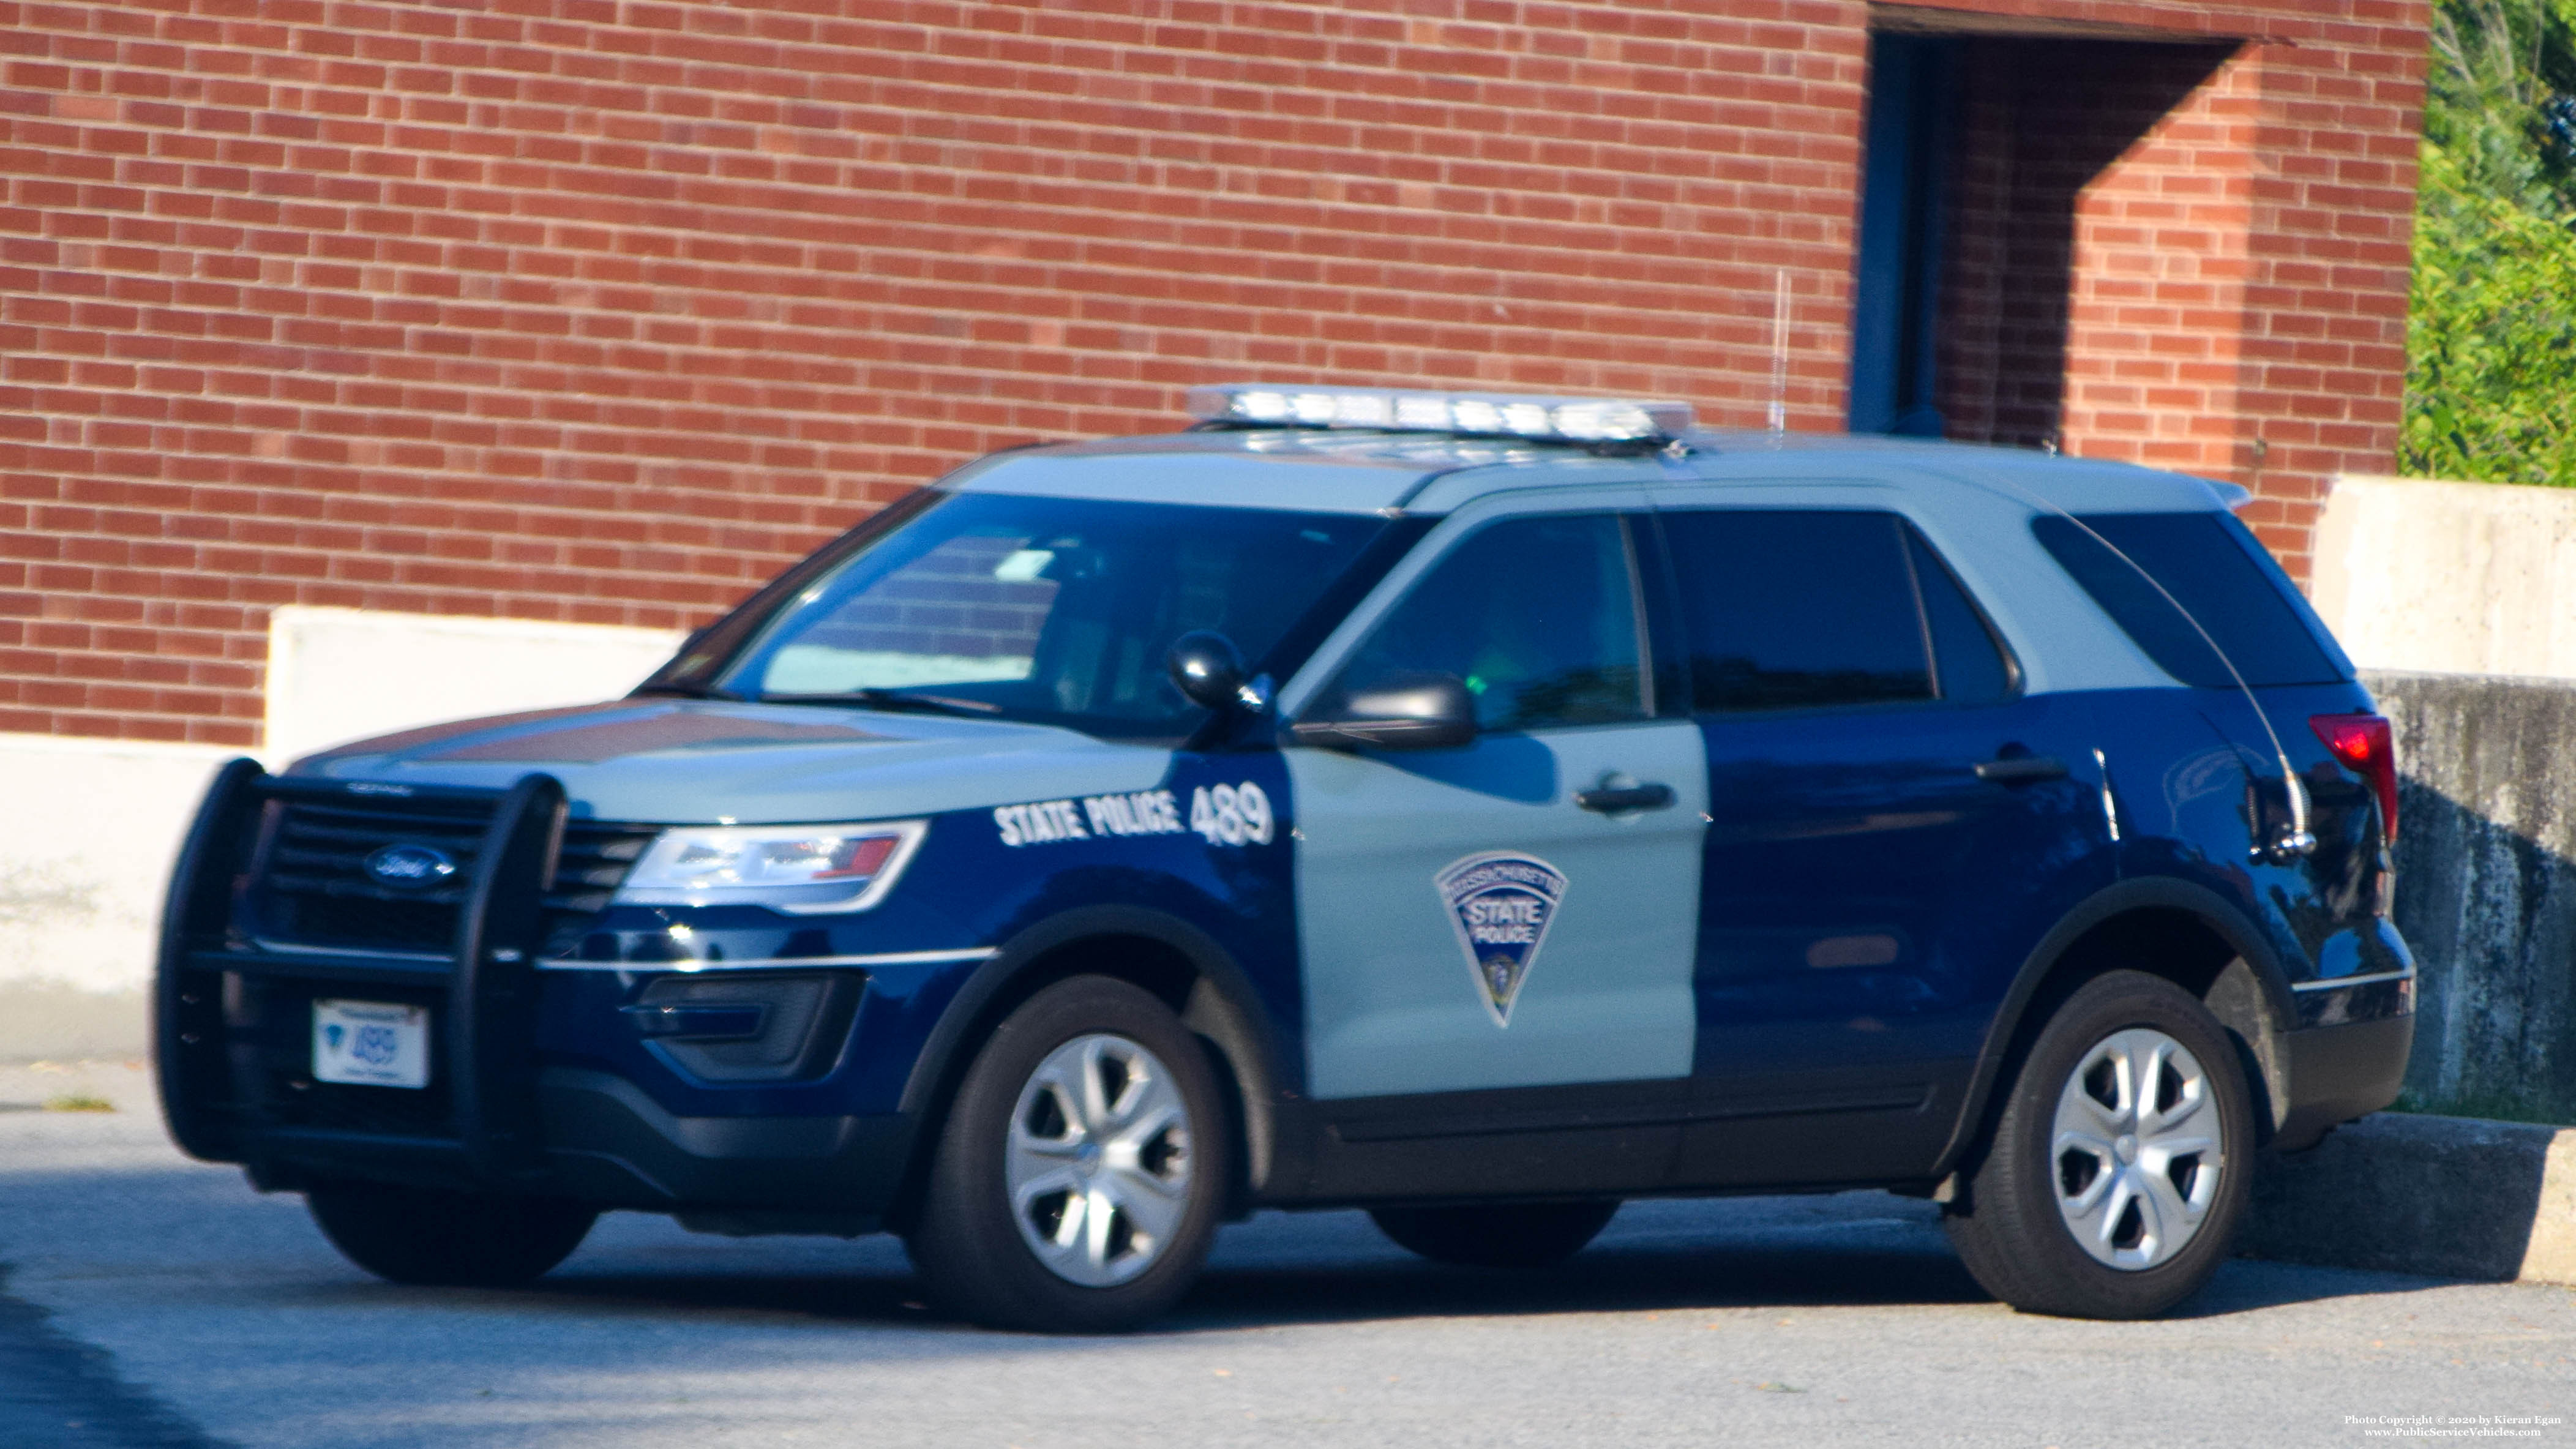 A photo  of Massachusetts State Police
            Cruiser 489, a 2017 Ford Police Interceptor Utility             taken by Kieran Egan